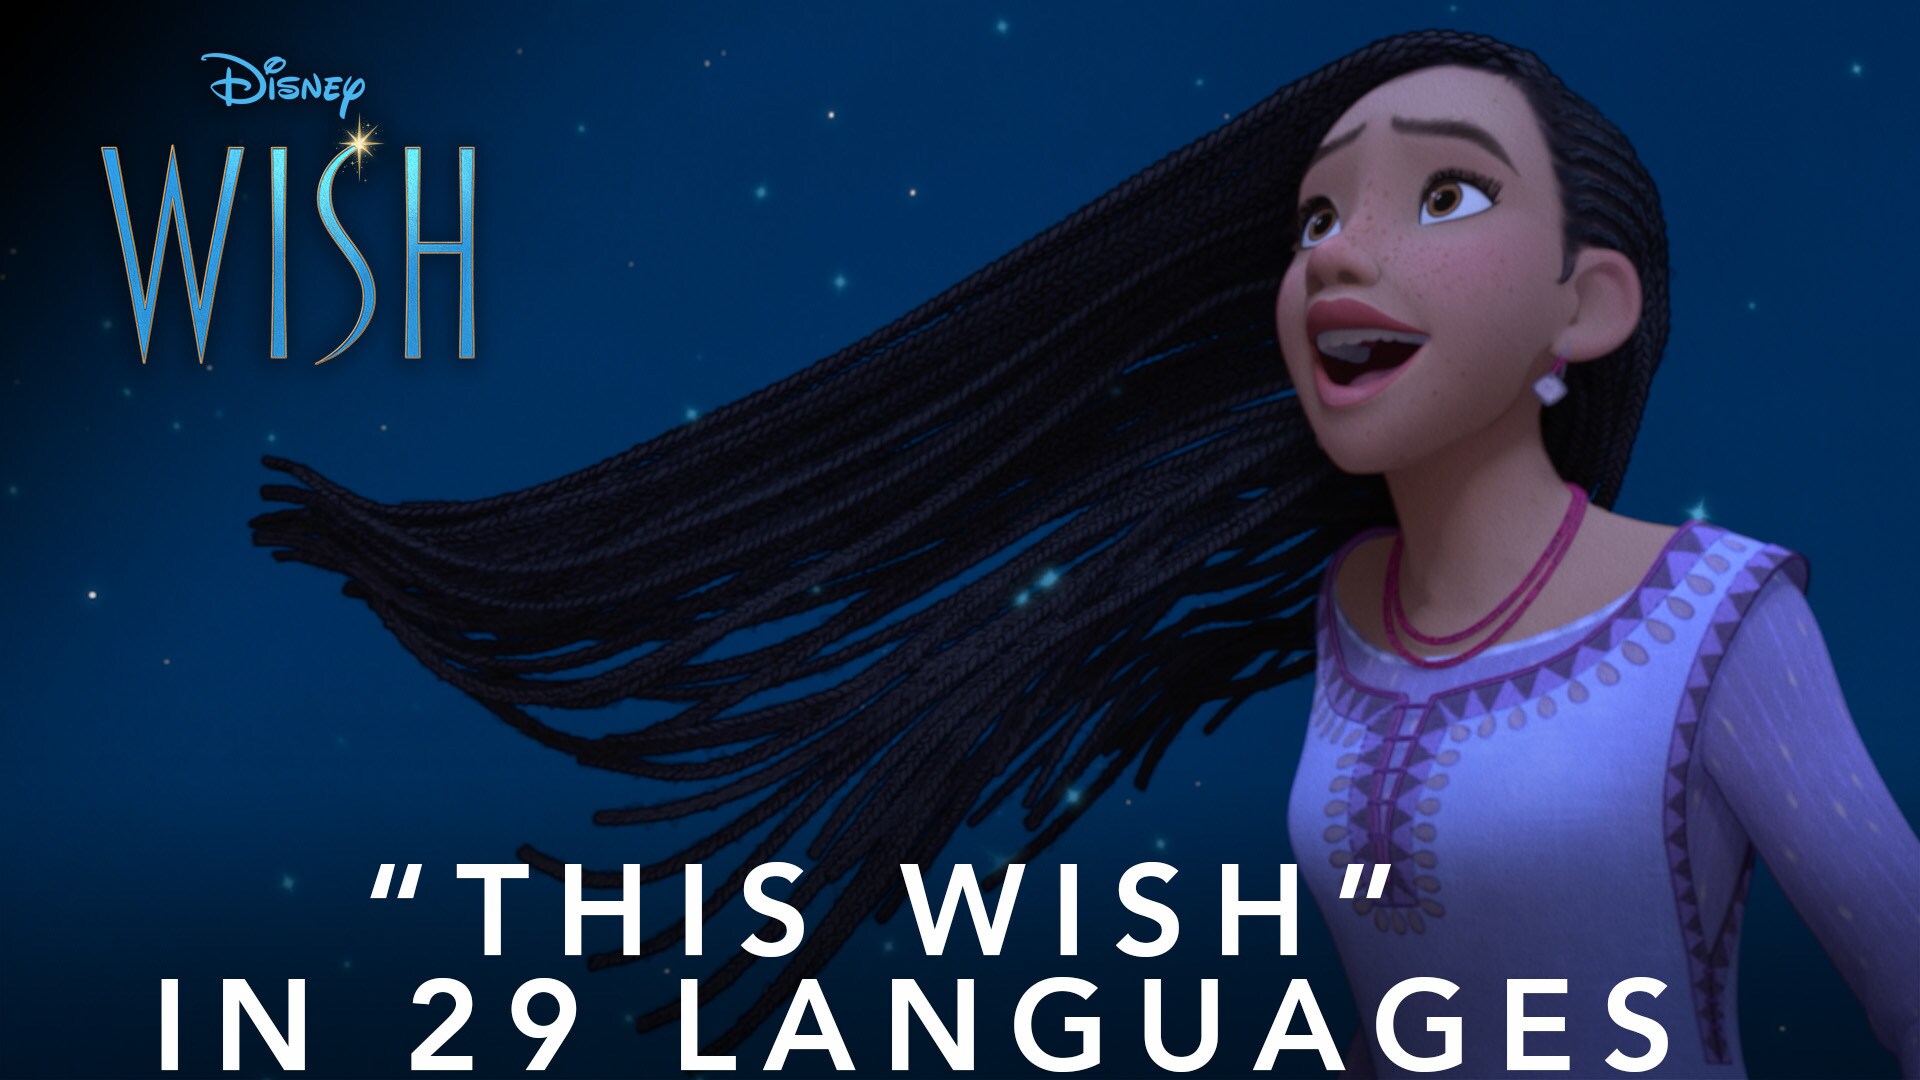 Disney's Wish | "This Wish" Multi-Language